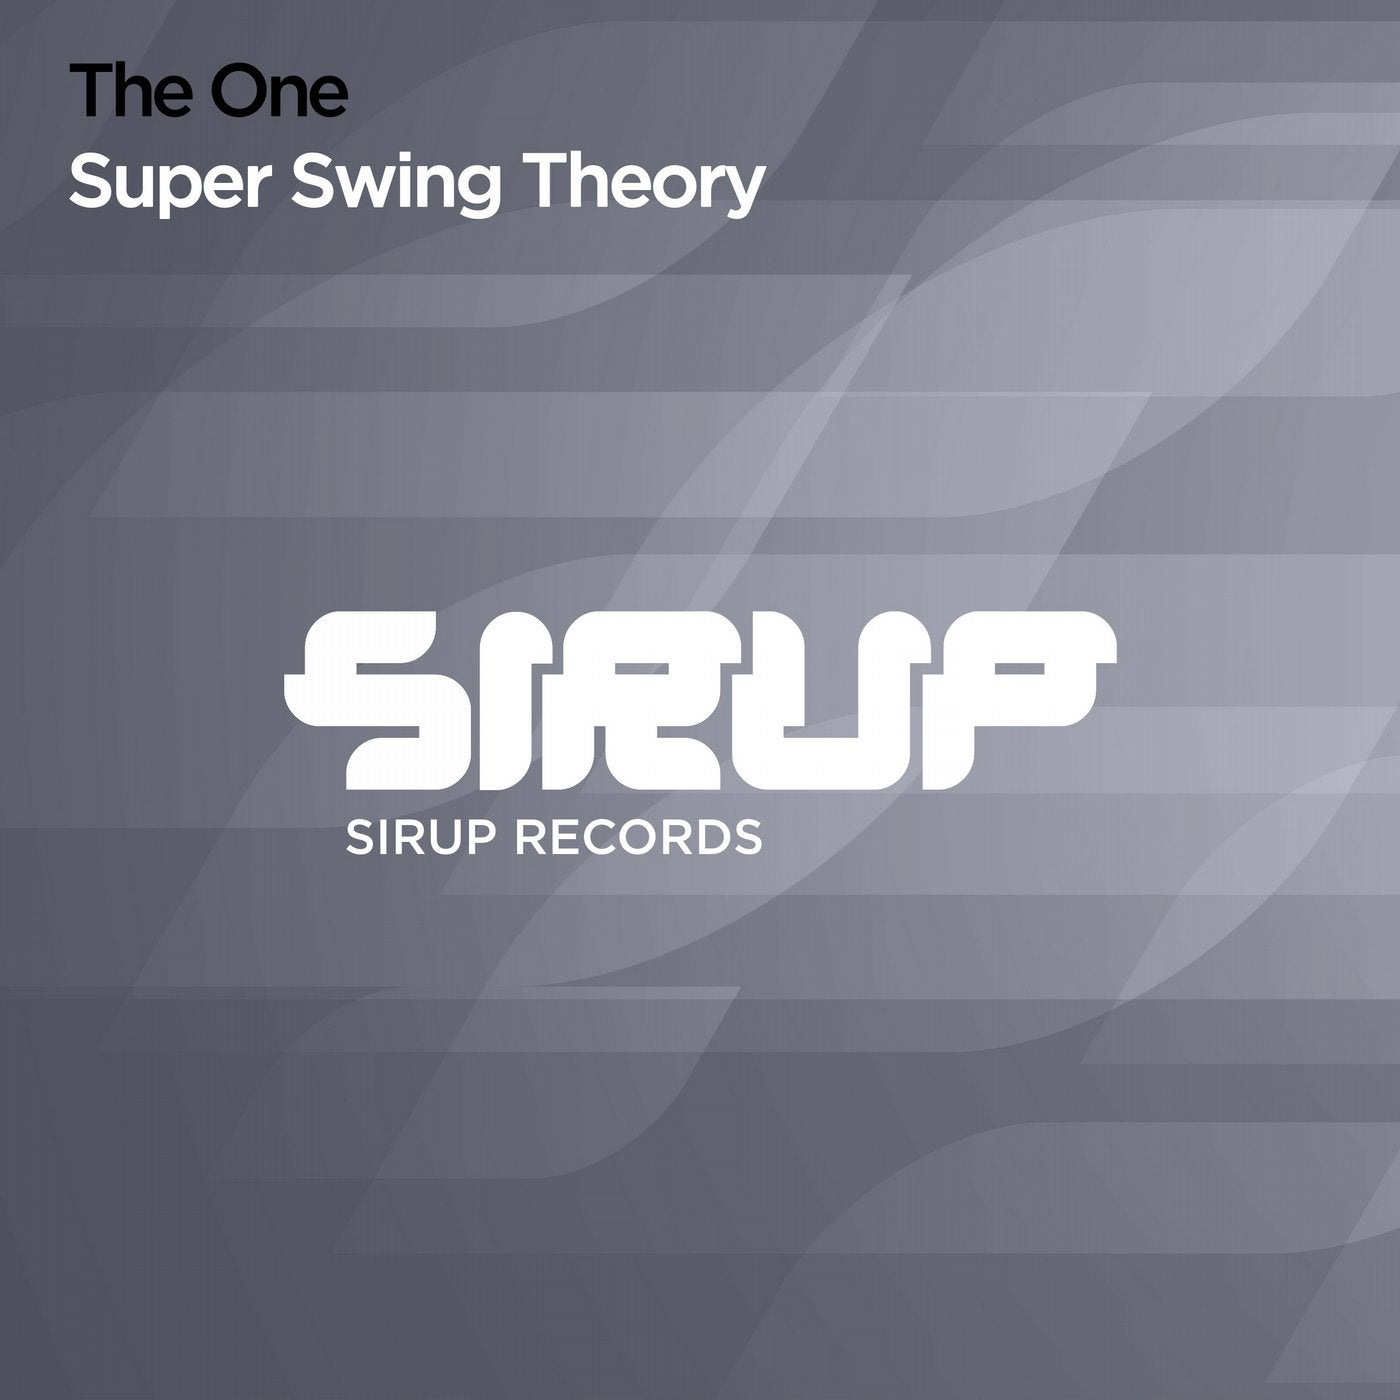 Super Swing Theory